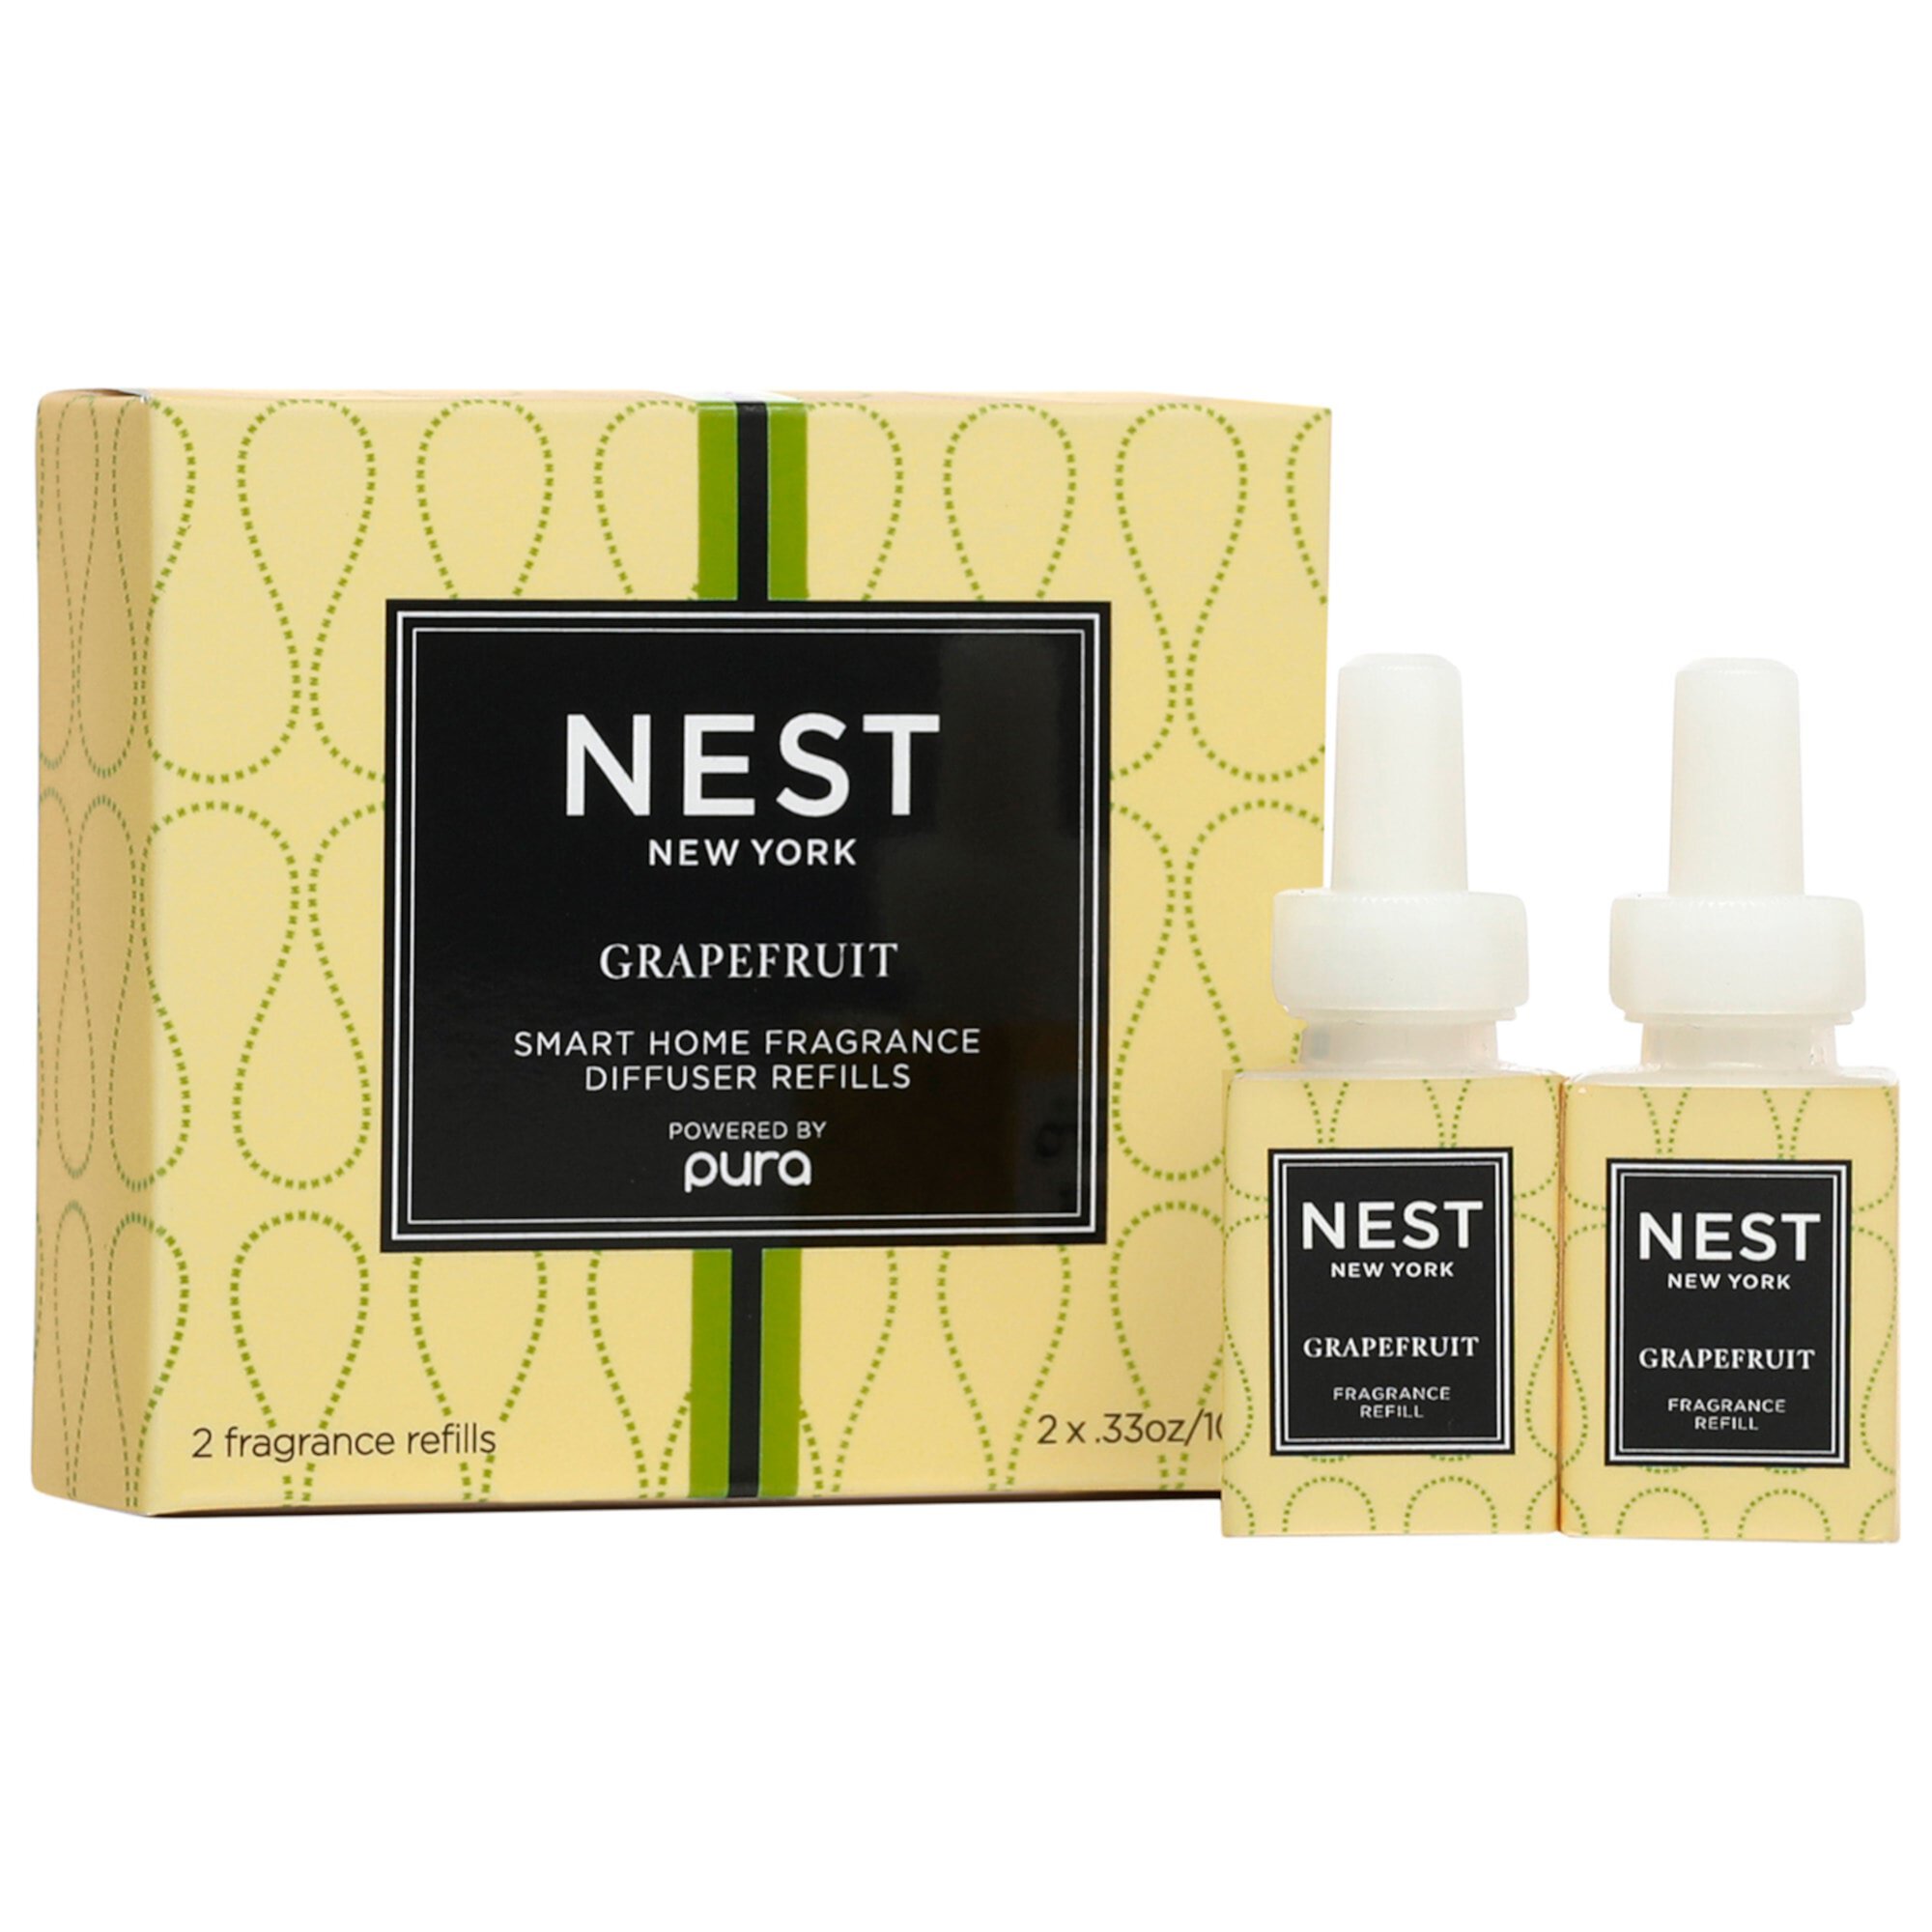 Pura Smart Home Fragrance Diffuser Set Nest New York